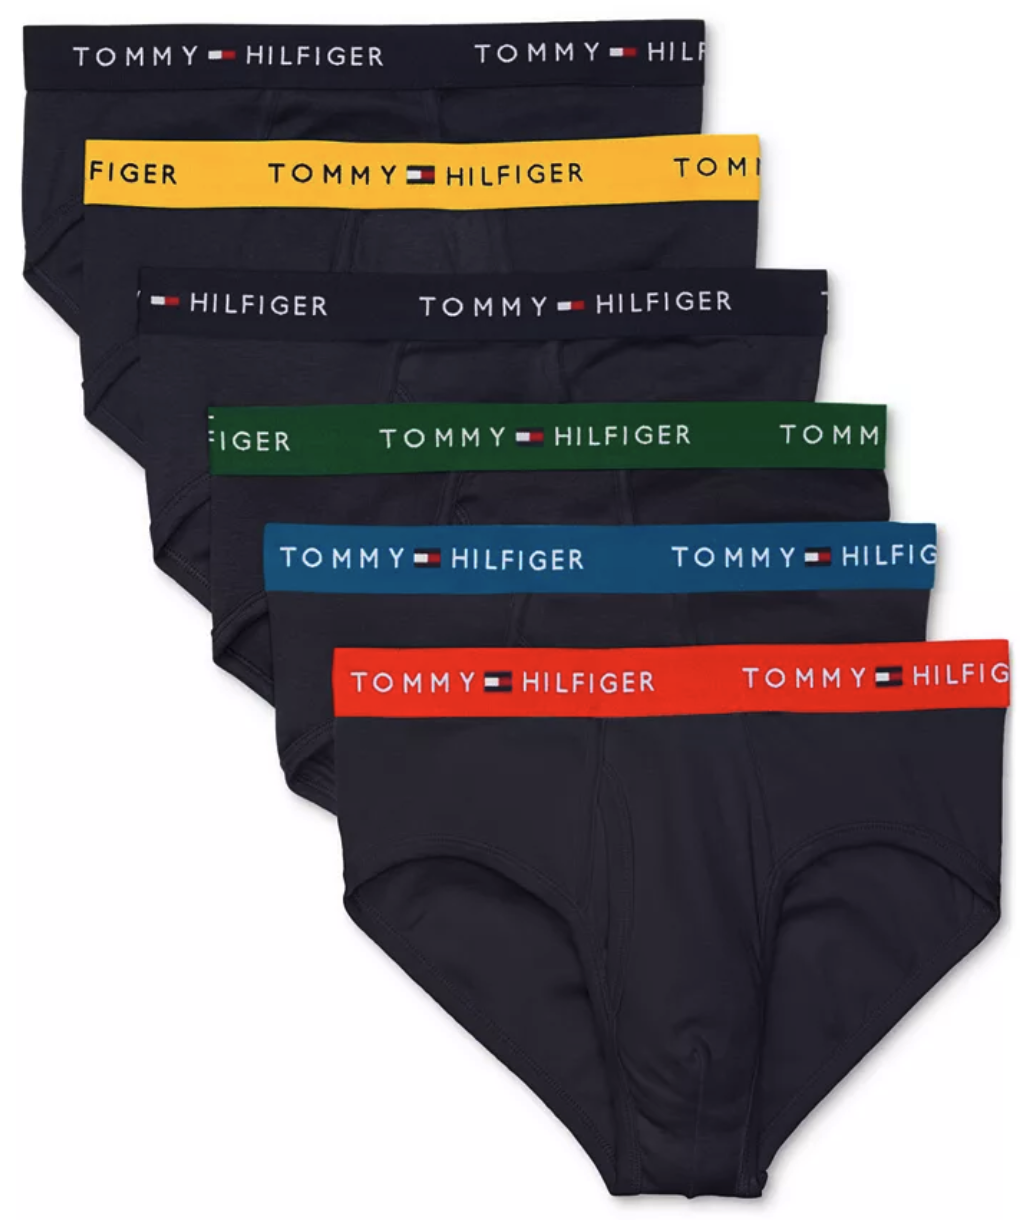 Tommy Hilfiger Men's 6-Pk Cotton Classic Briefs - $28.56 + $10 SD Cashback + Free Shipping @Macys (Desktop Only) $18.56